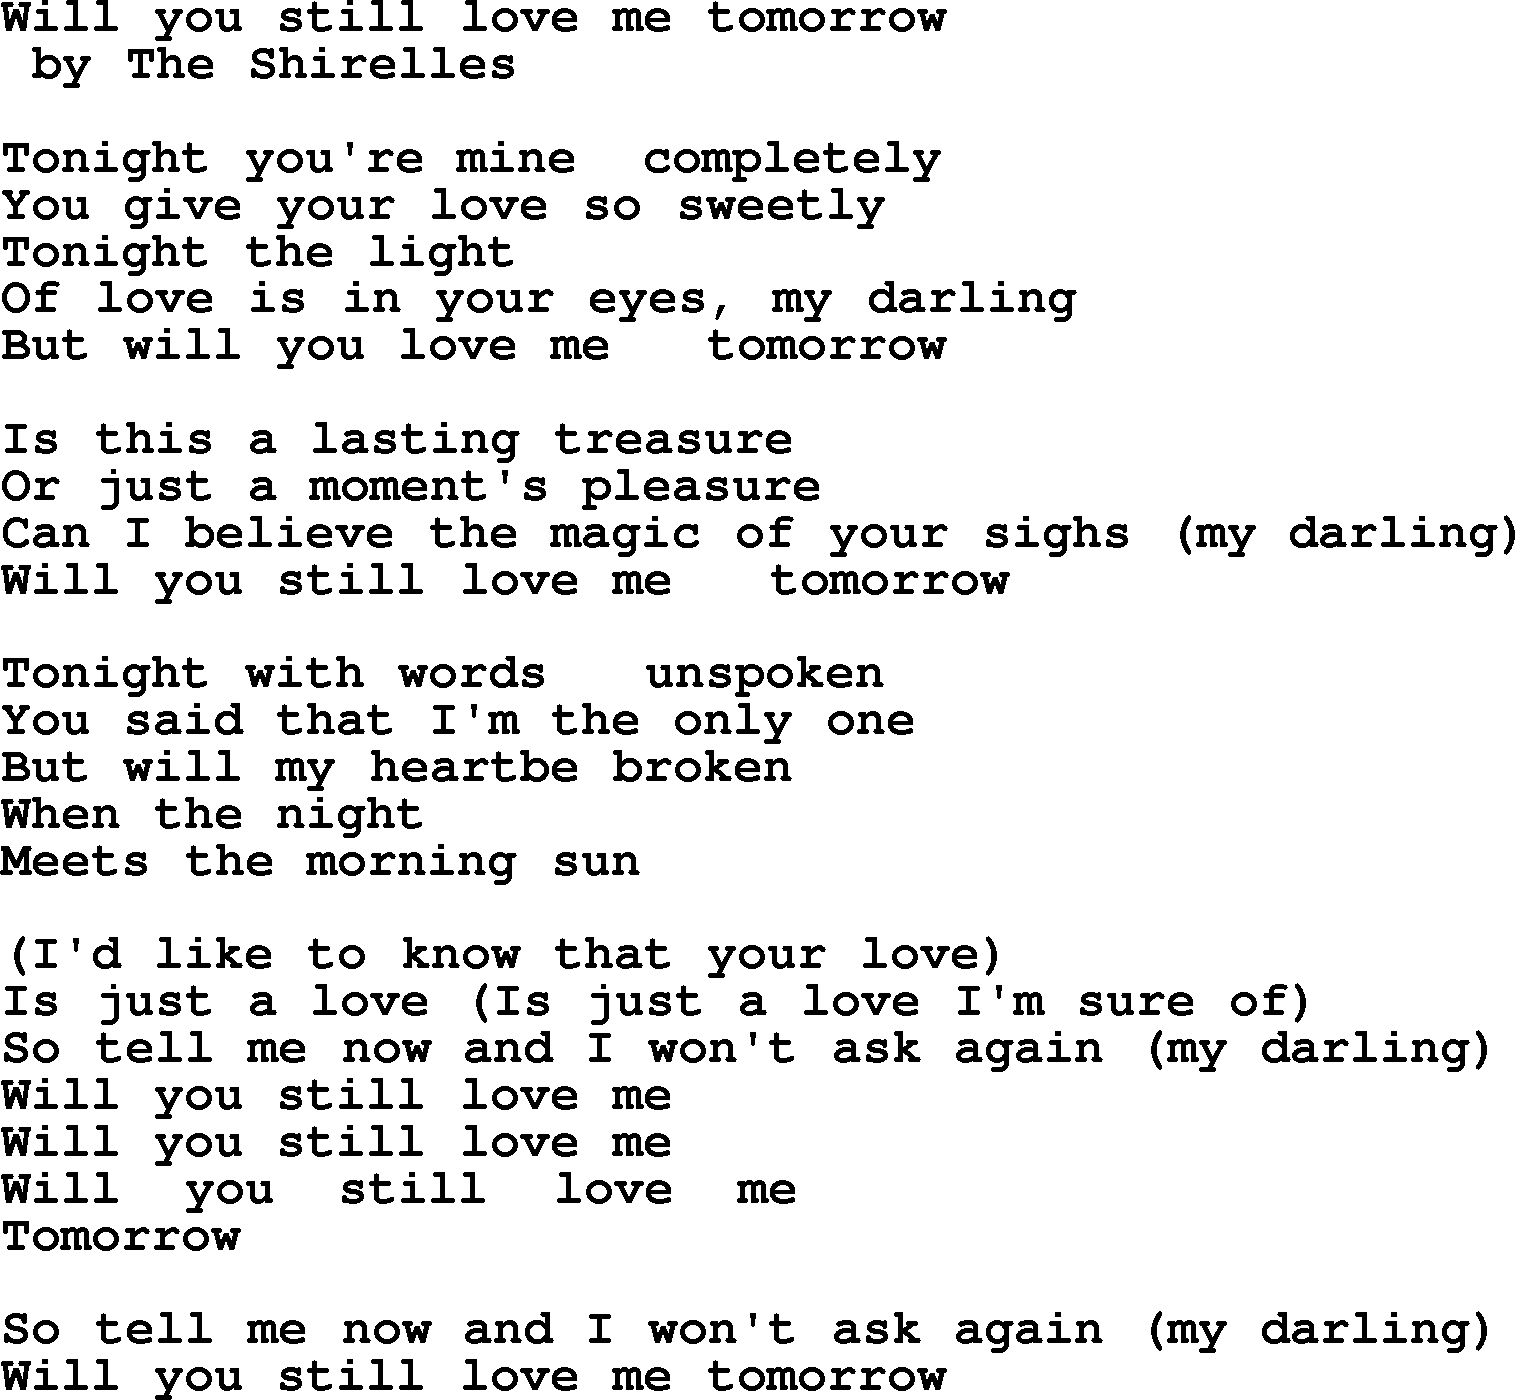 Bruce Springsteen Song Will You Still Love Me Tomorrow Lyrics 